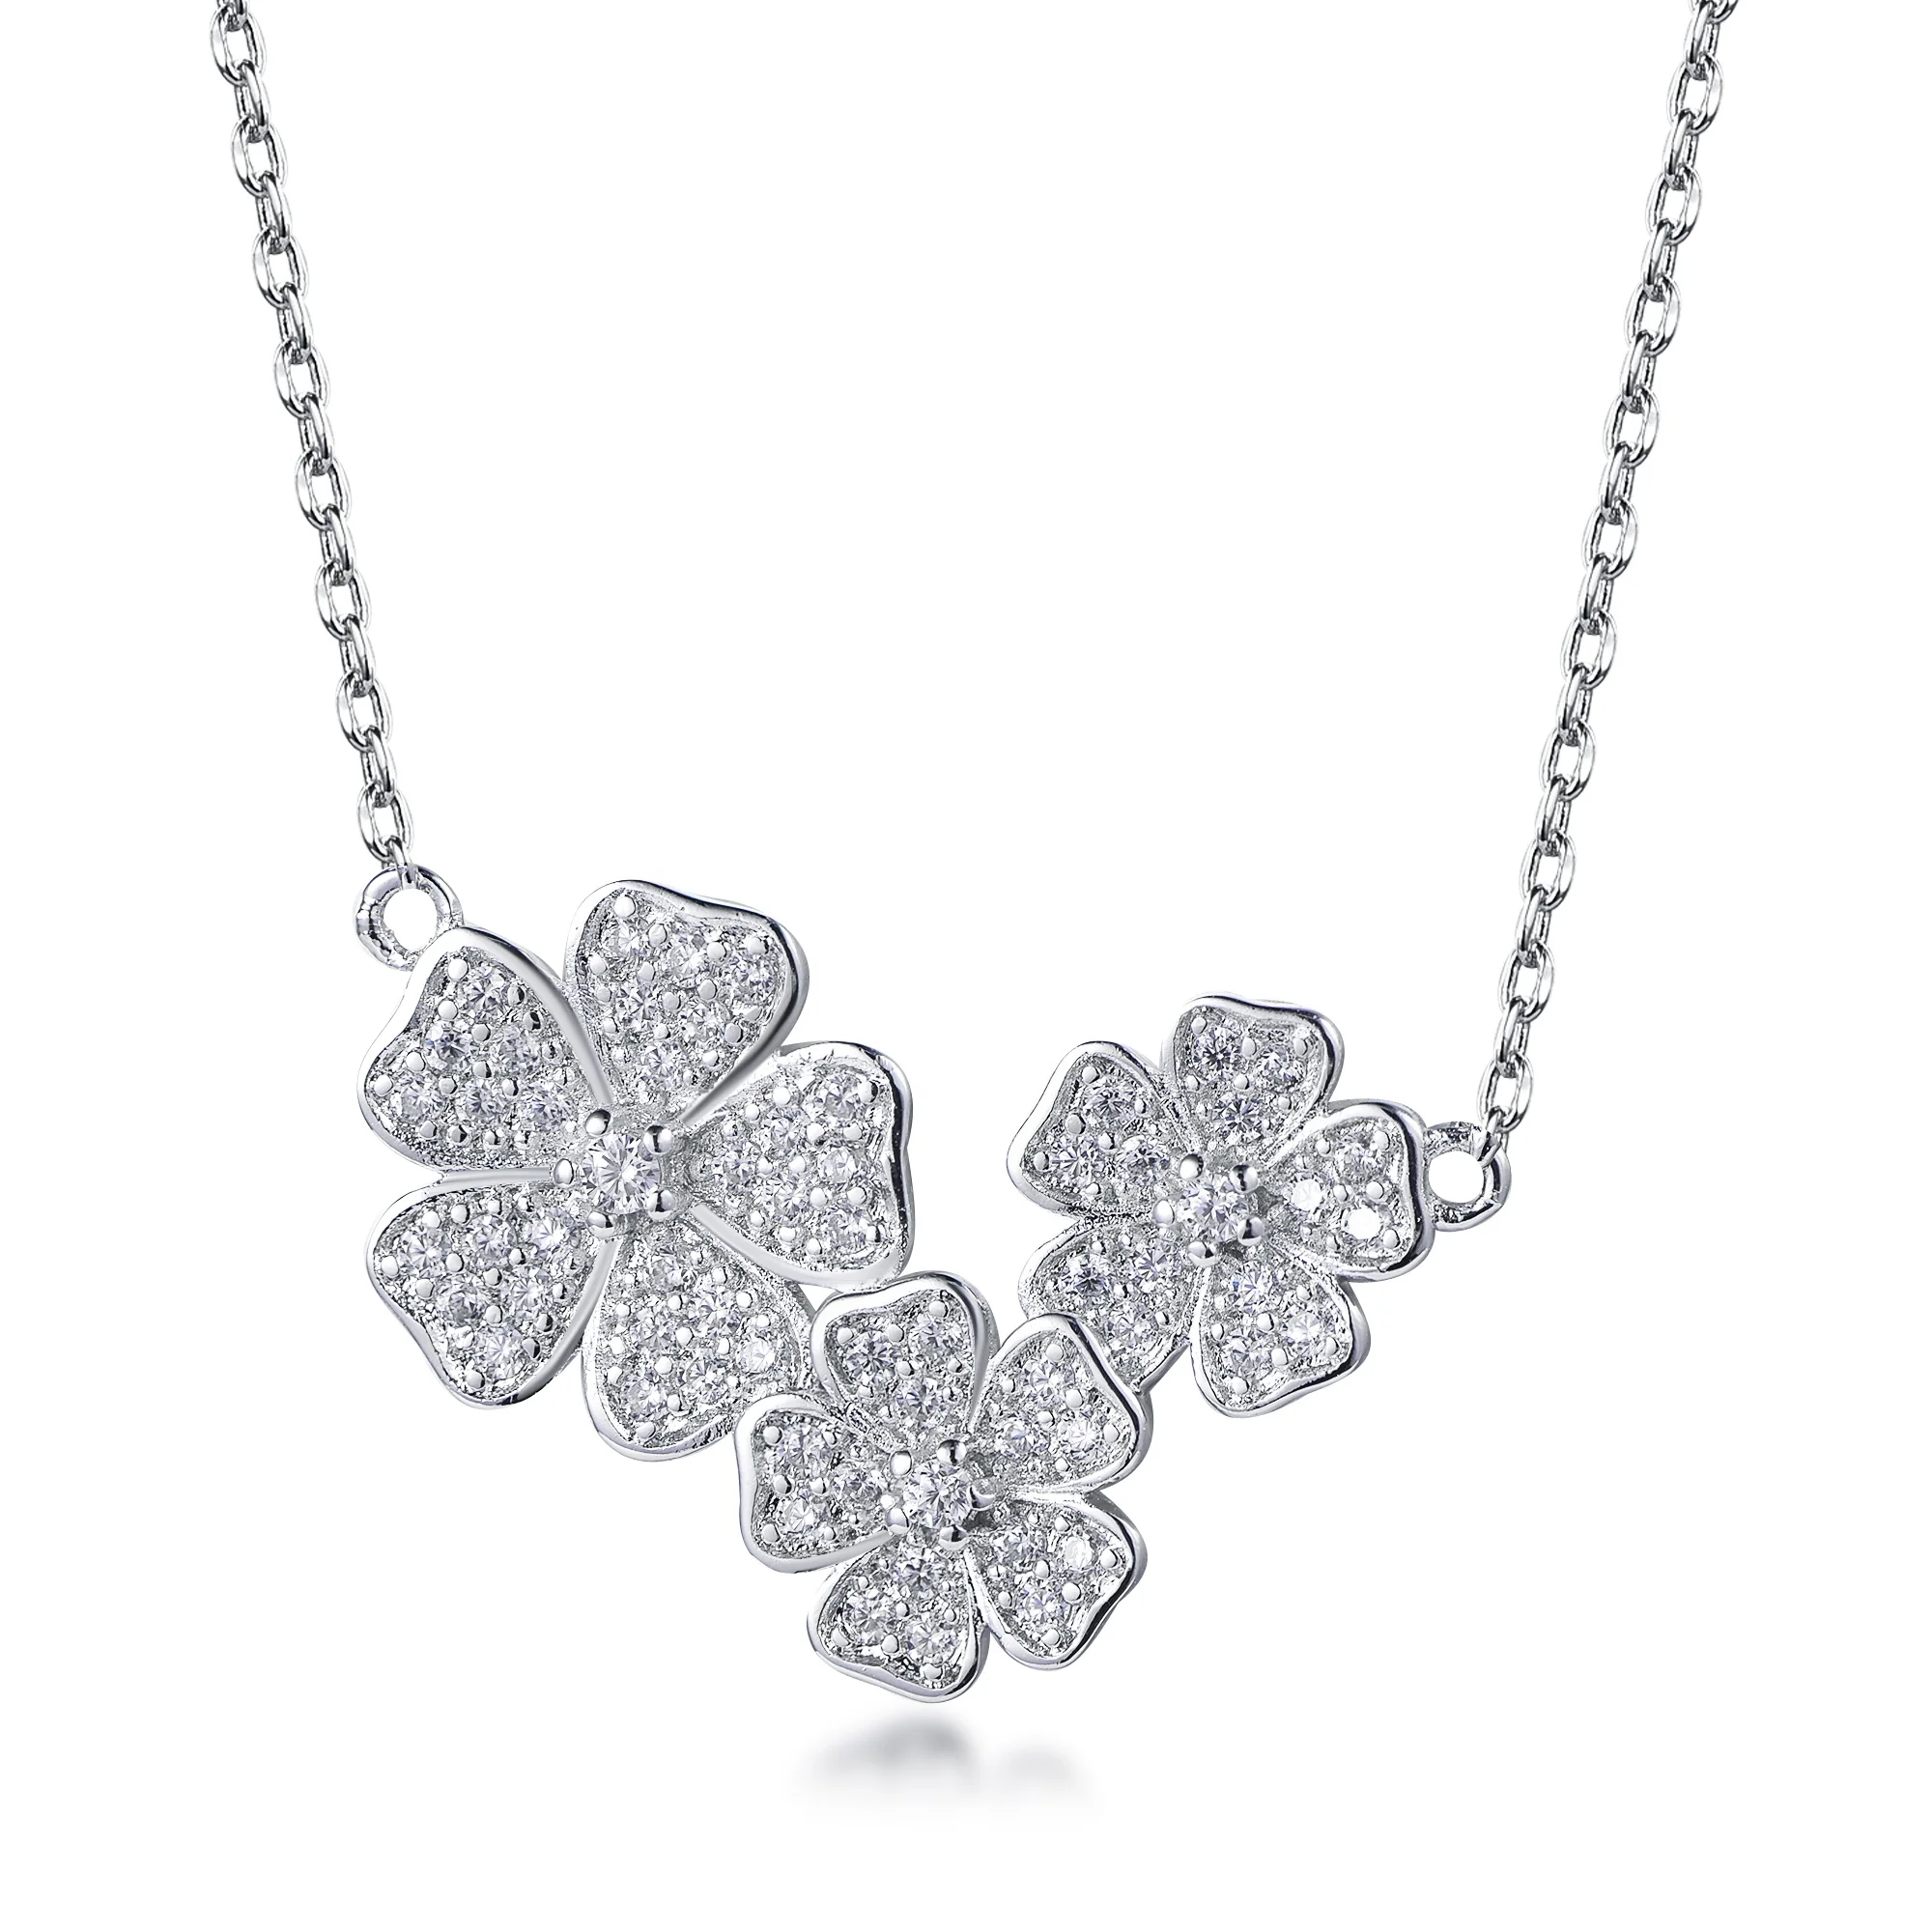 dainty flower necklace pendant Micro pave Cubic Zirconia Diamond Jewelry Wedding Bridal Jewellery flower necklace